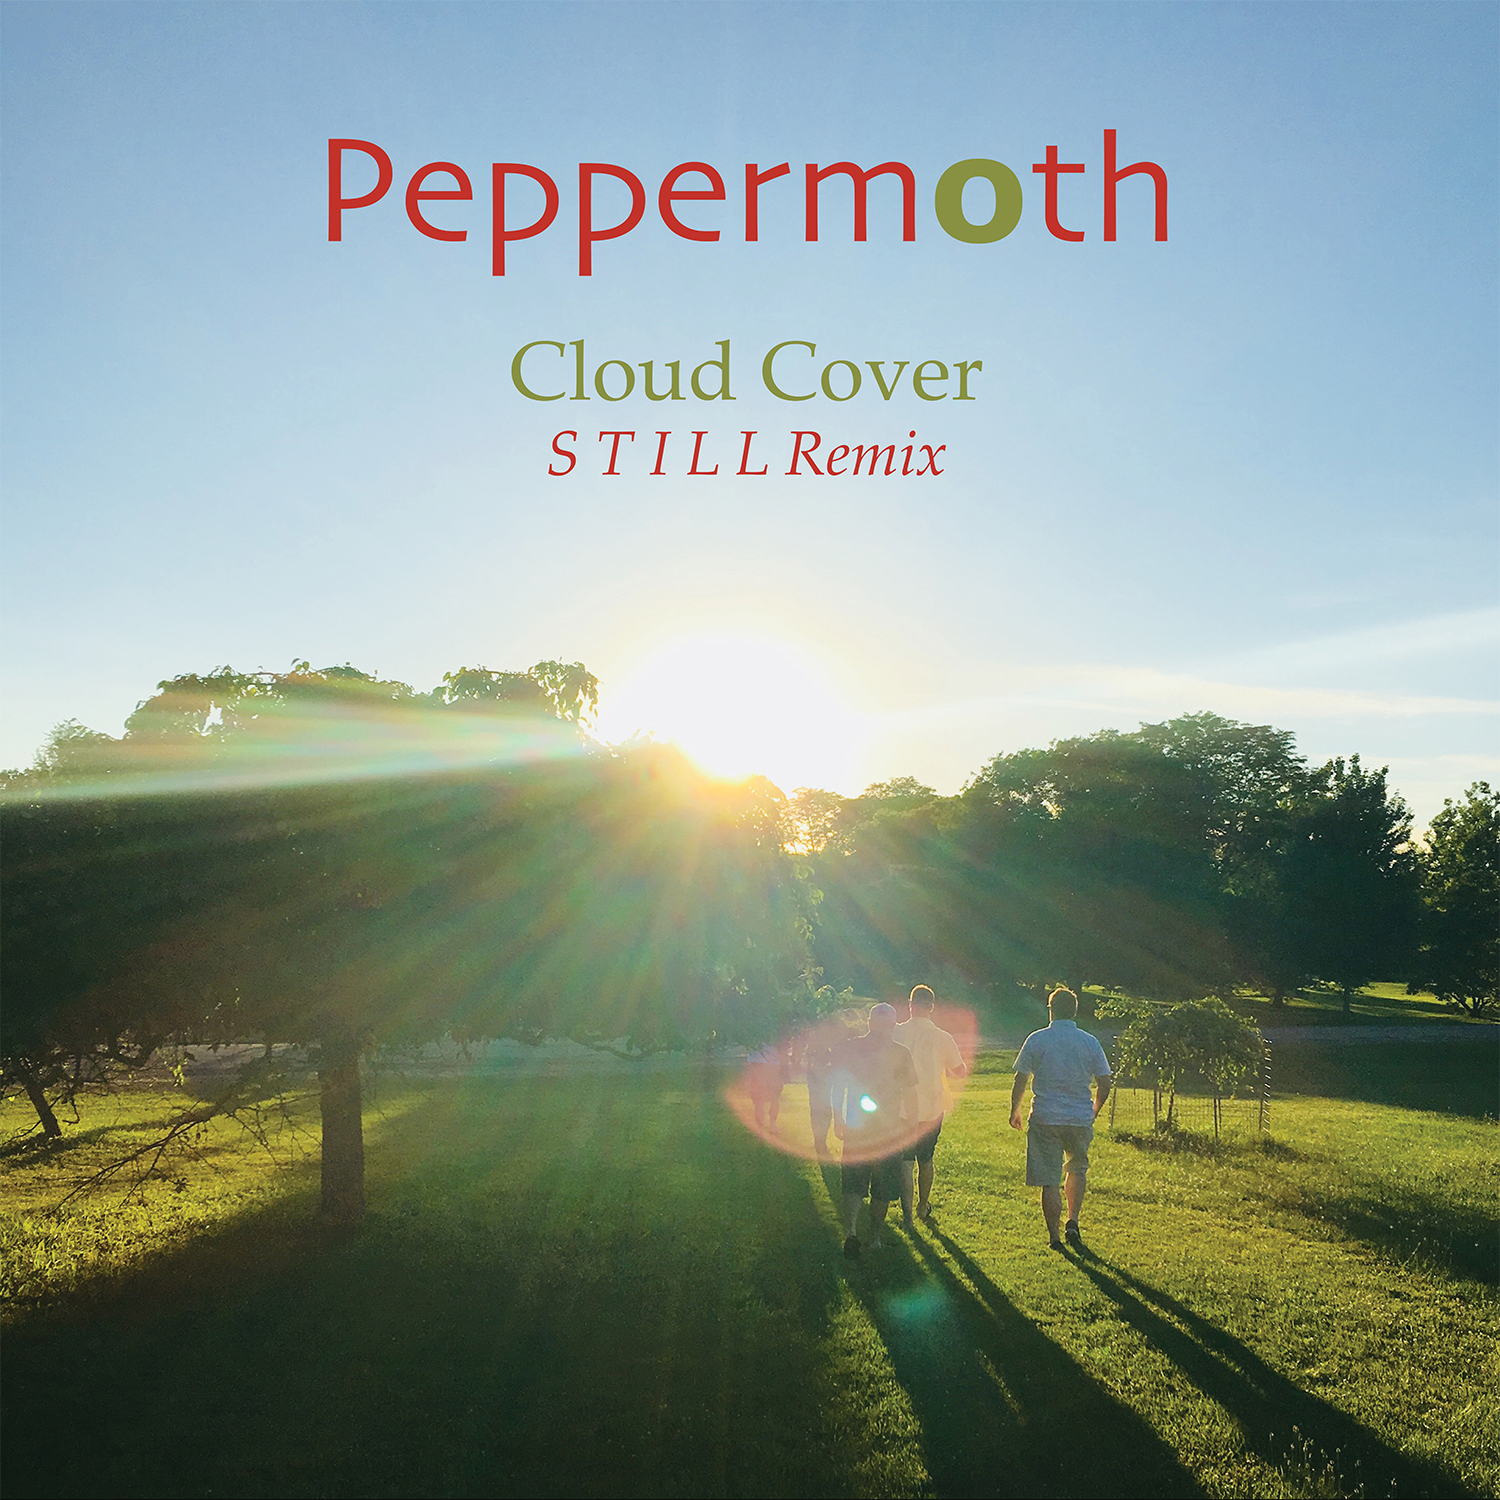 peppermoth cloud cover still remix